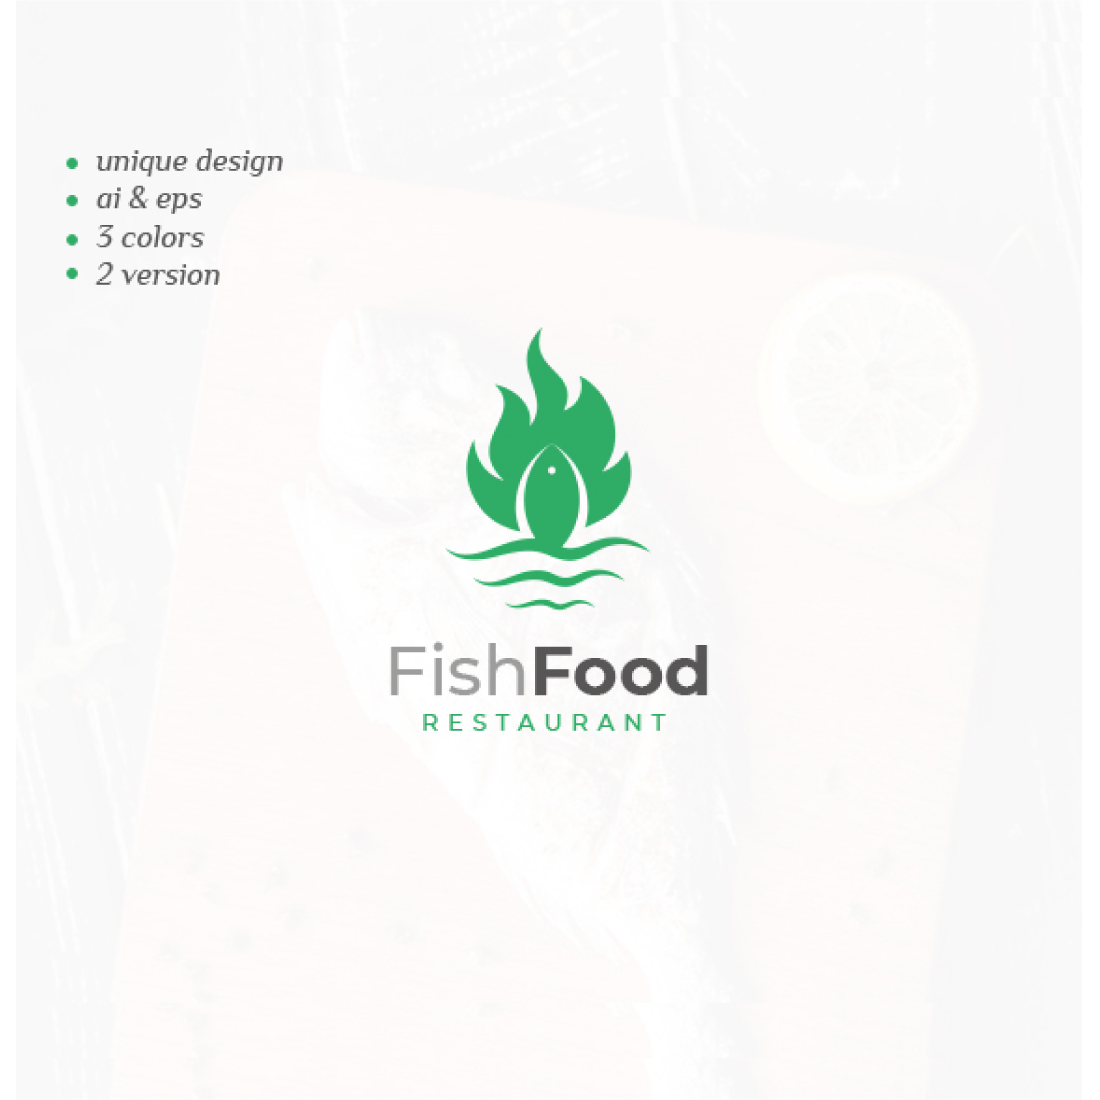 Fish Food Logo cover image.